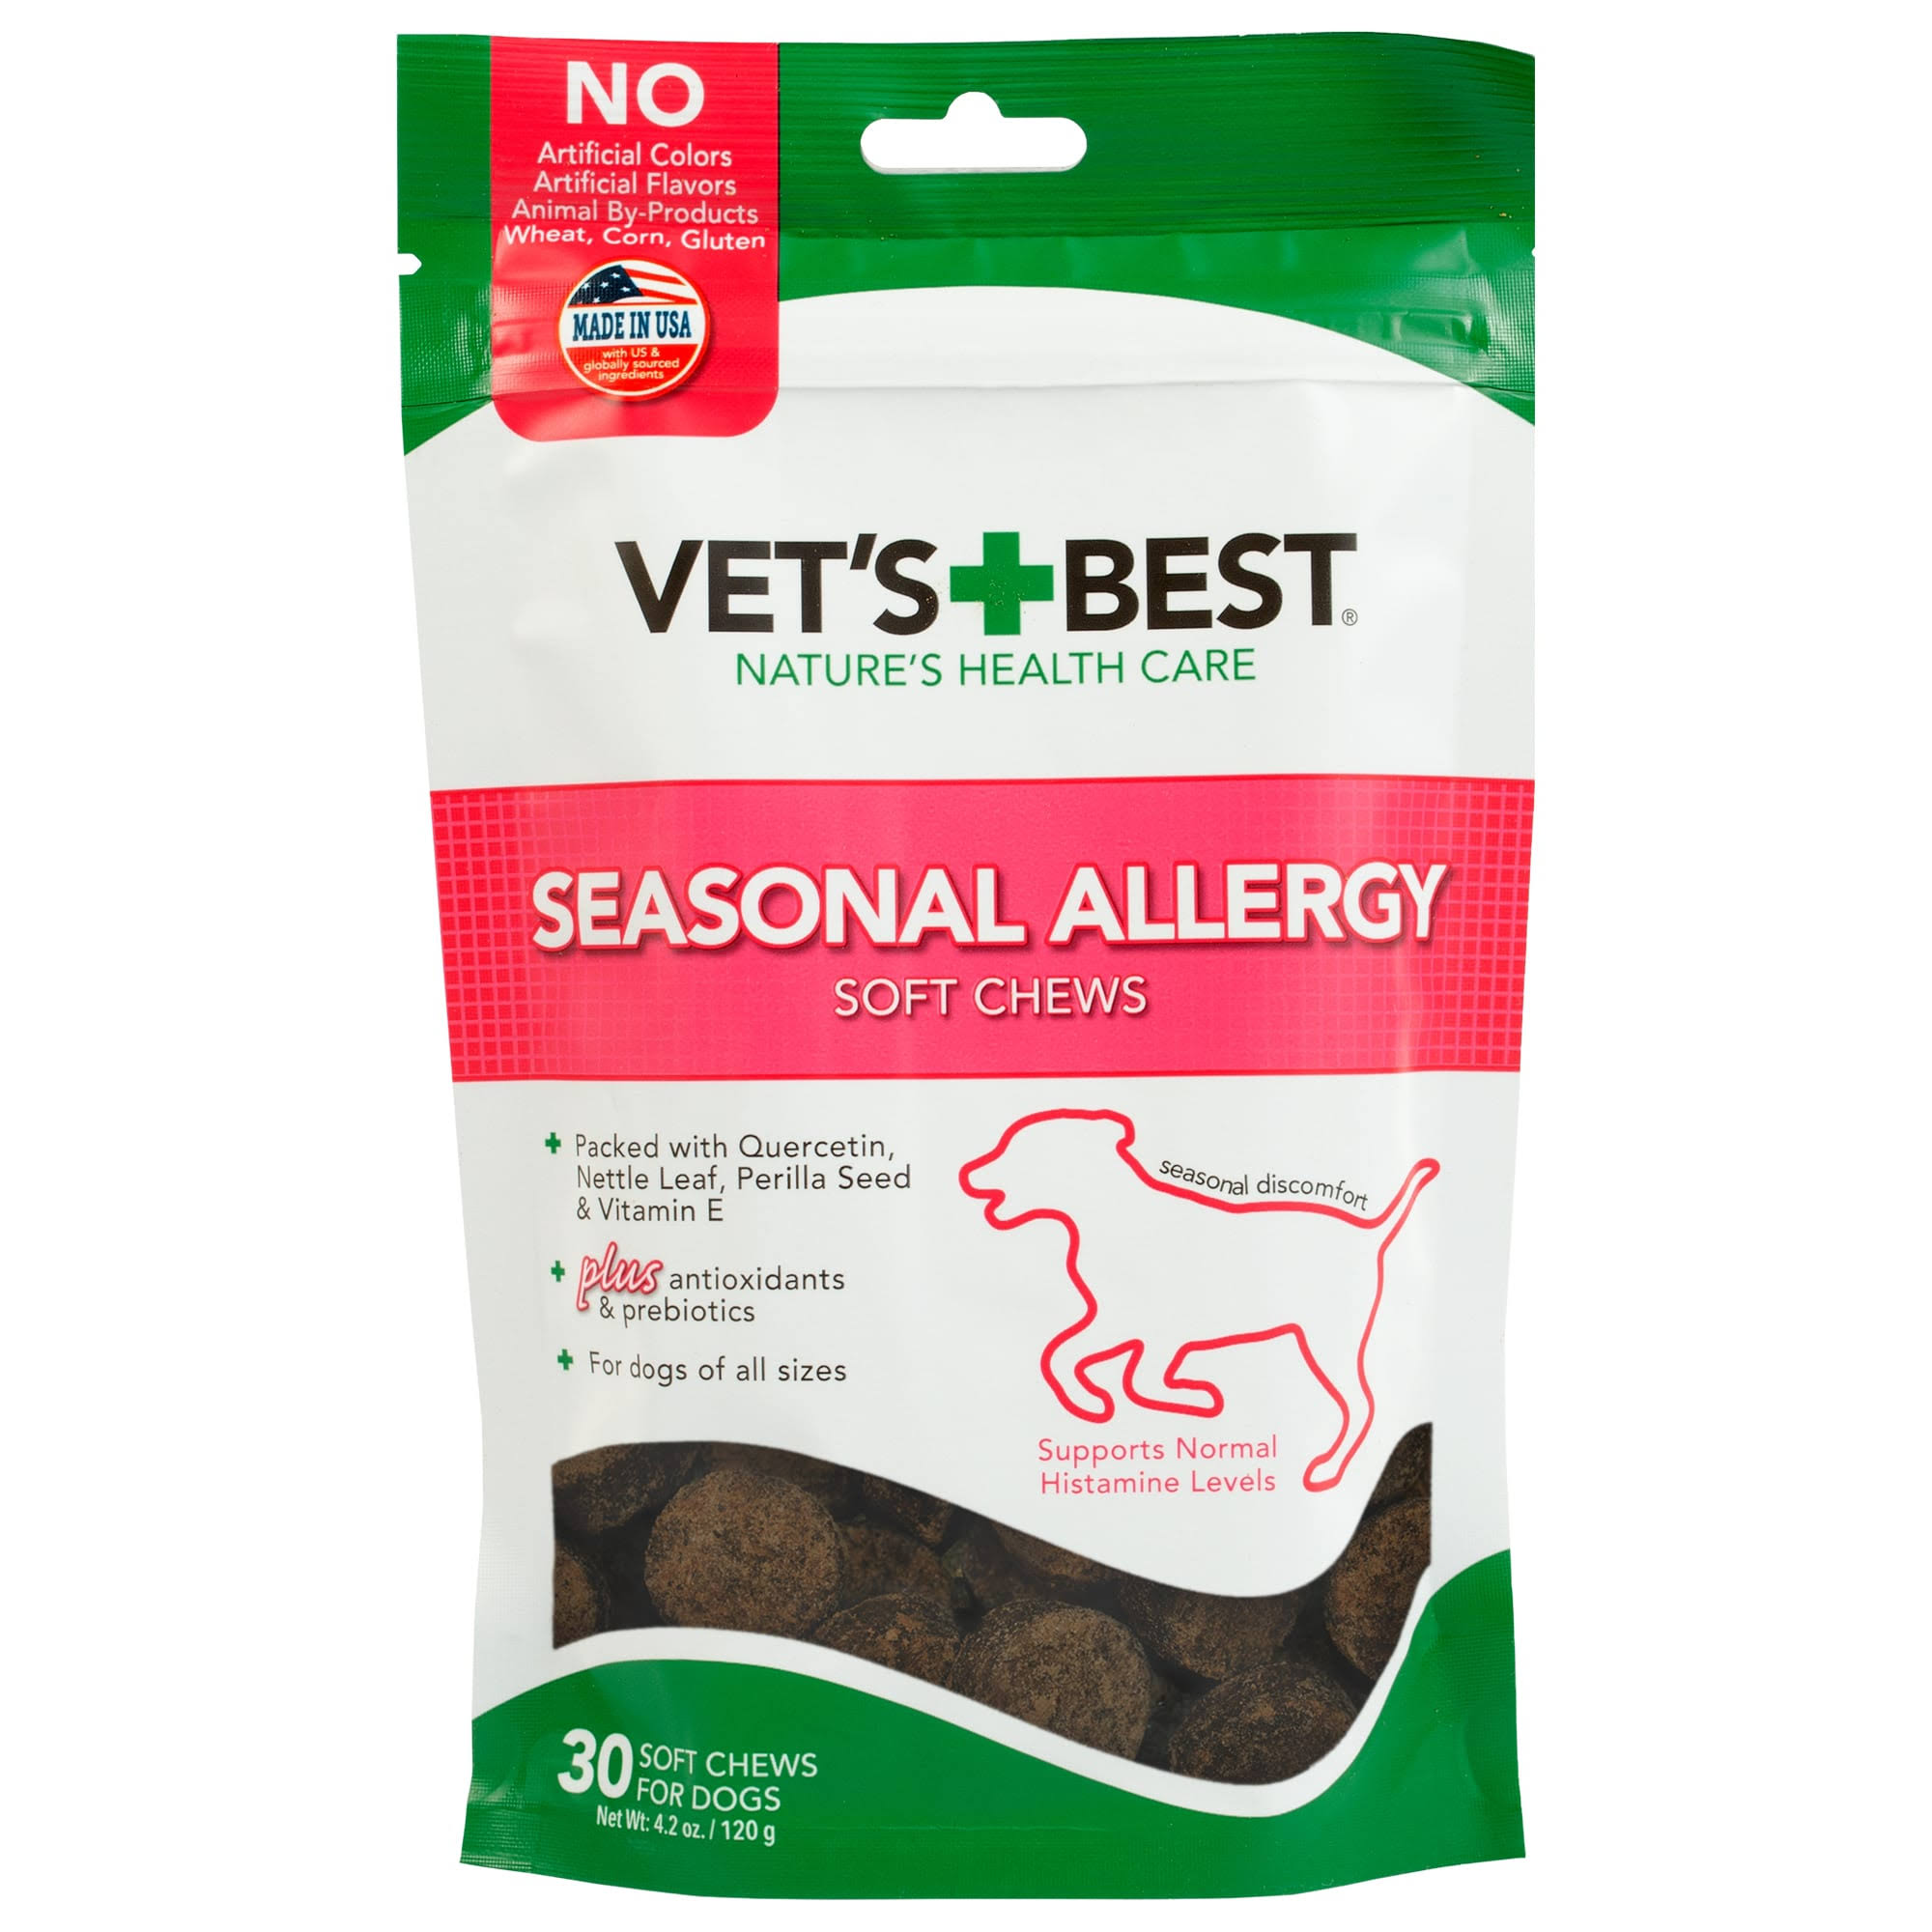 Vet's Best Seasonal Allergy Soft Chews Dog Supplement - 30 Count